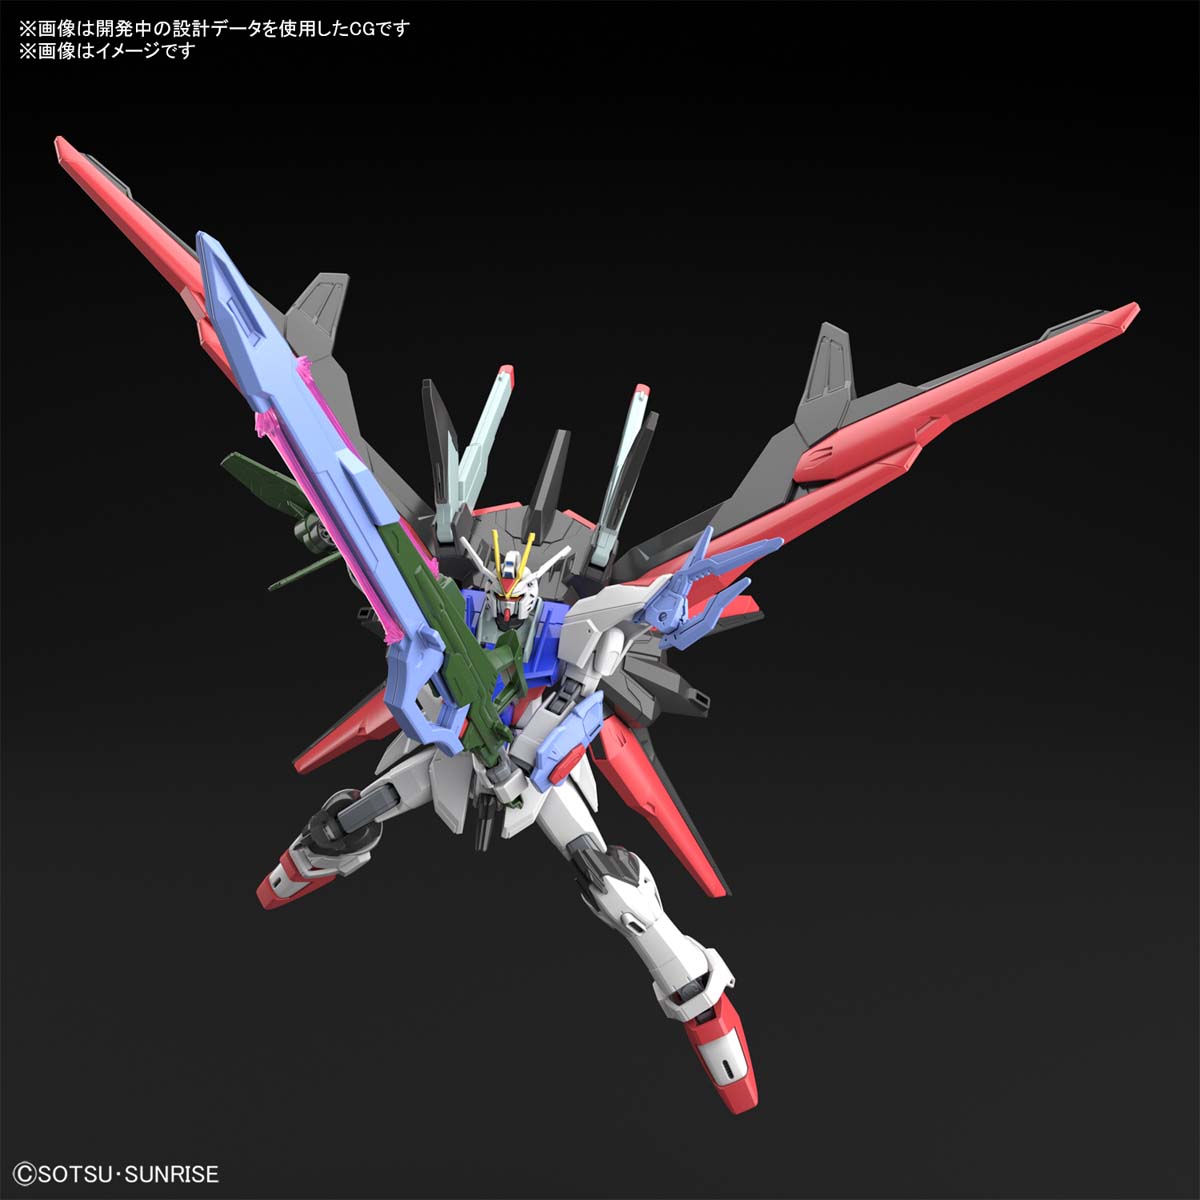 HGGB 1144 Gundam Perfect Strike Freedom   Rise of Gunpla